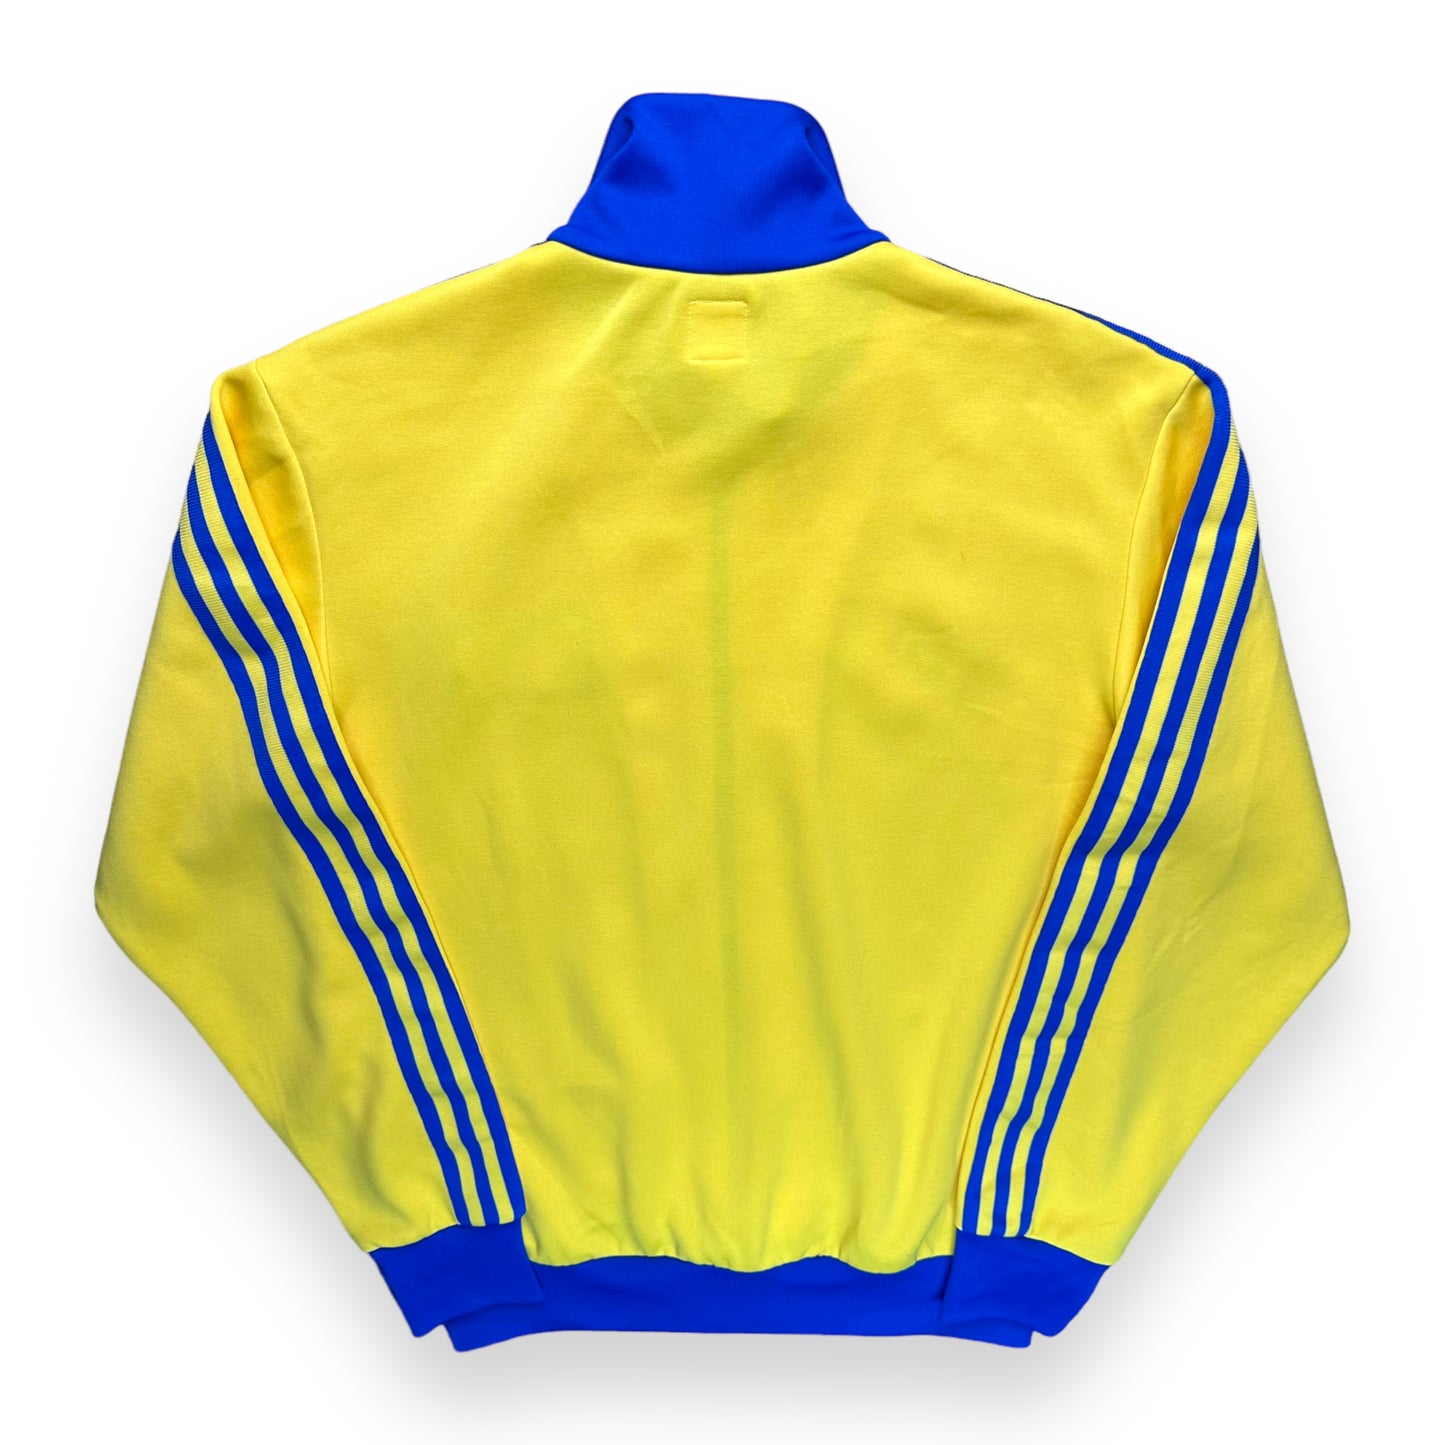 Sweden 1974 Adidas Originals Training Jacket (L)